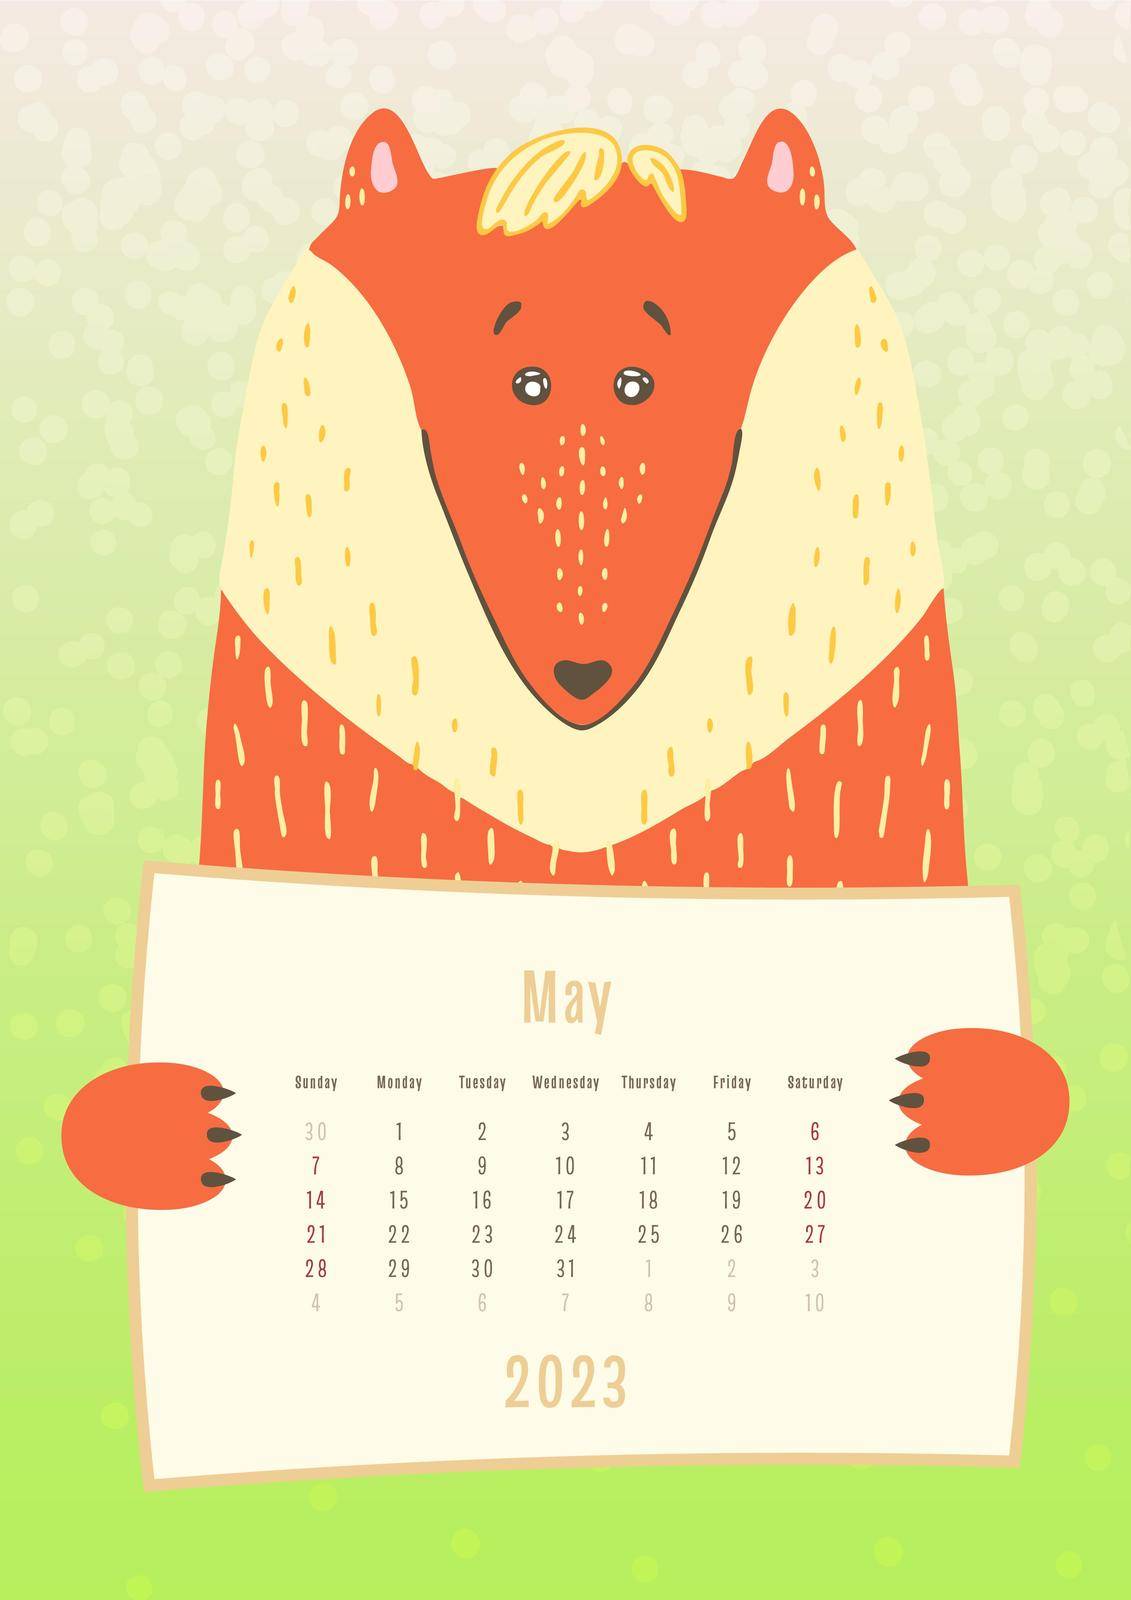 2023 may calendar, cute fox animal holding a monthly calendar sheet, hand drawn childish style by MariaTem